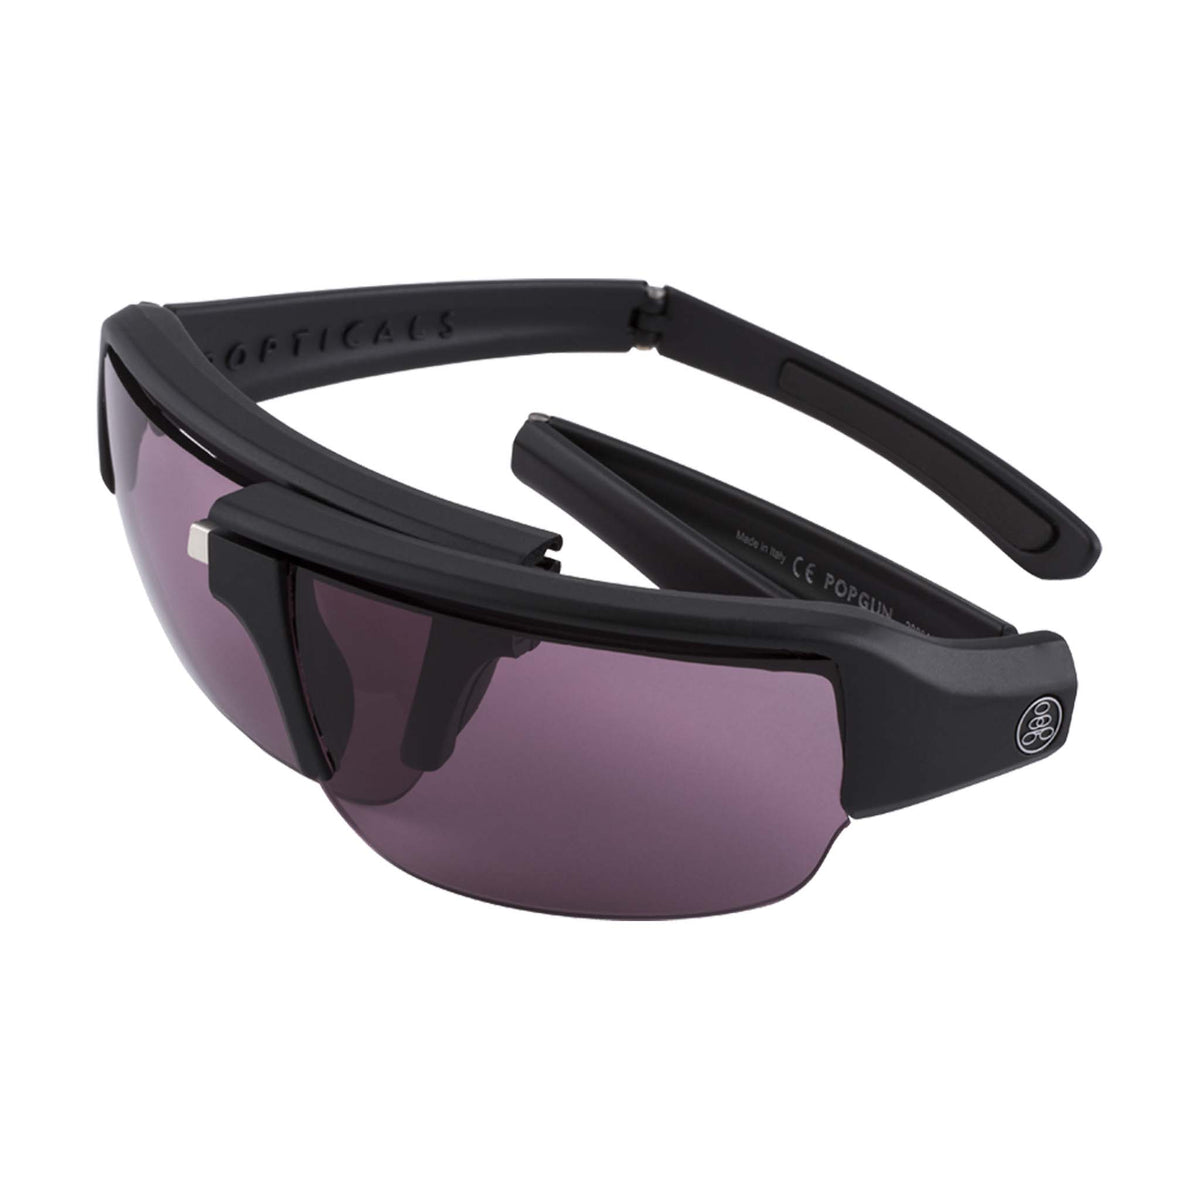 Popticals, Premium Compact Sunglasses, PopGun, 200010-BMVS, Standard Golf Sunglasses, Matte Black Frame, Violet Golf Lenses, Spider View